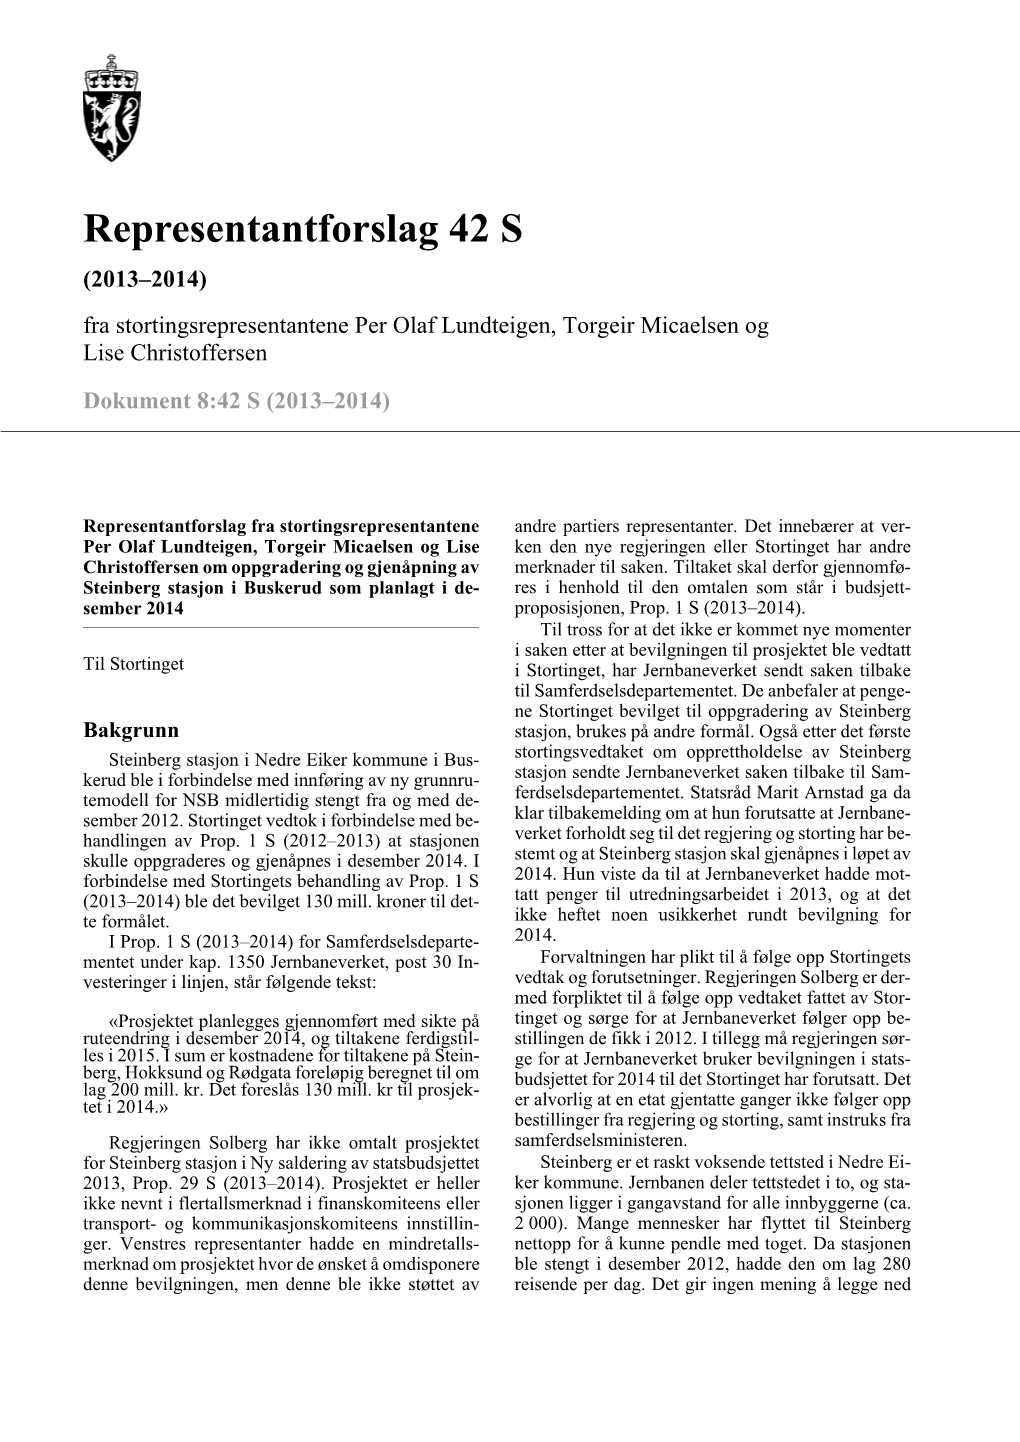 Representantforslag 42 S (2013–2014) Fra Stortingsrepresentantene Per Olaf Lundteigen, Torgeir Micaelsen Og Lise Christoffersen